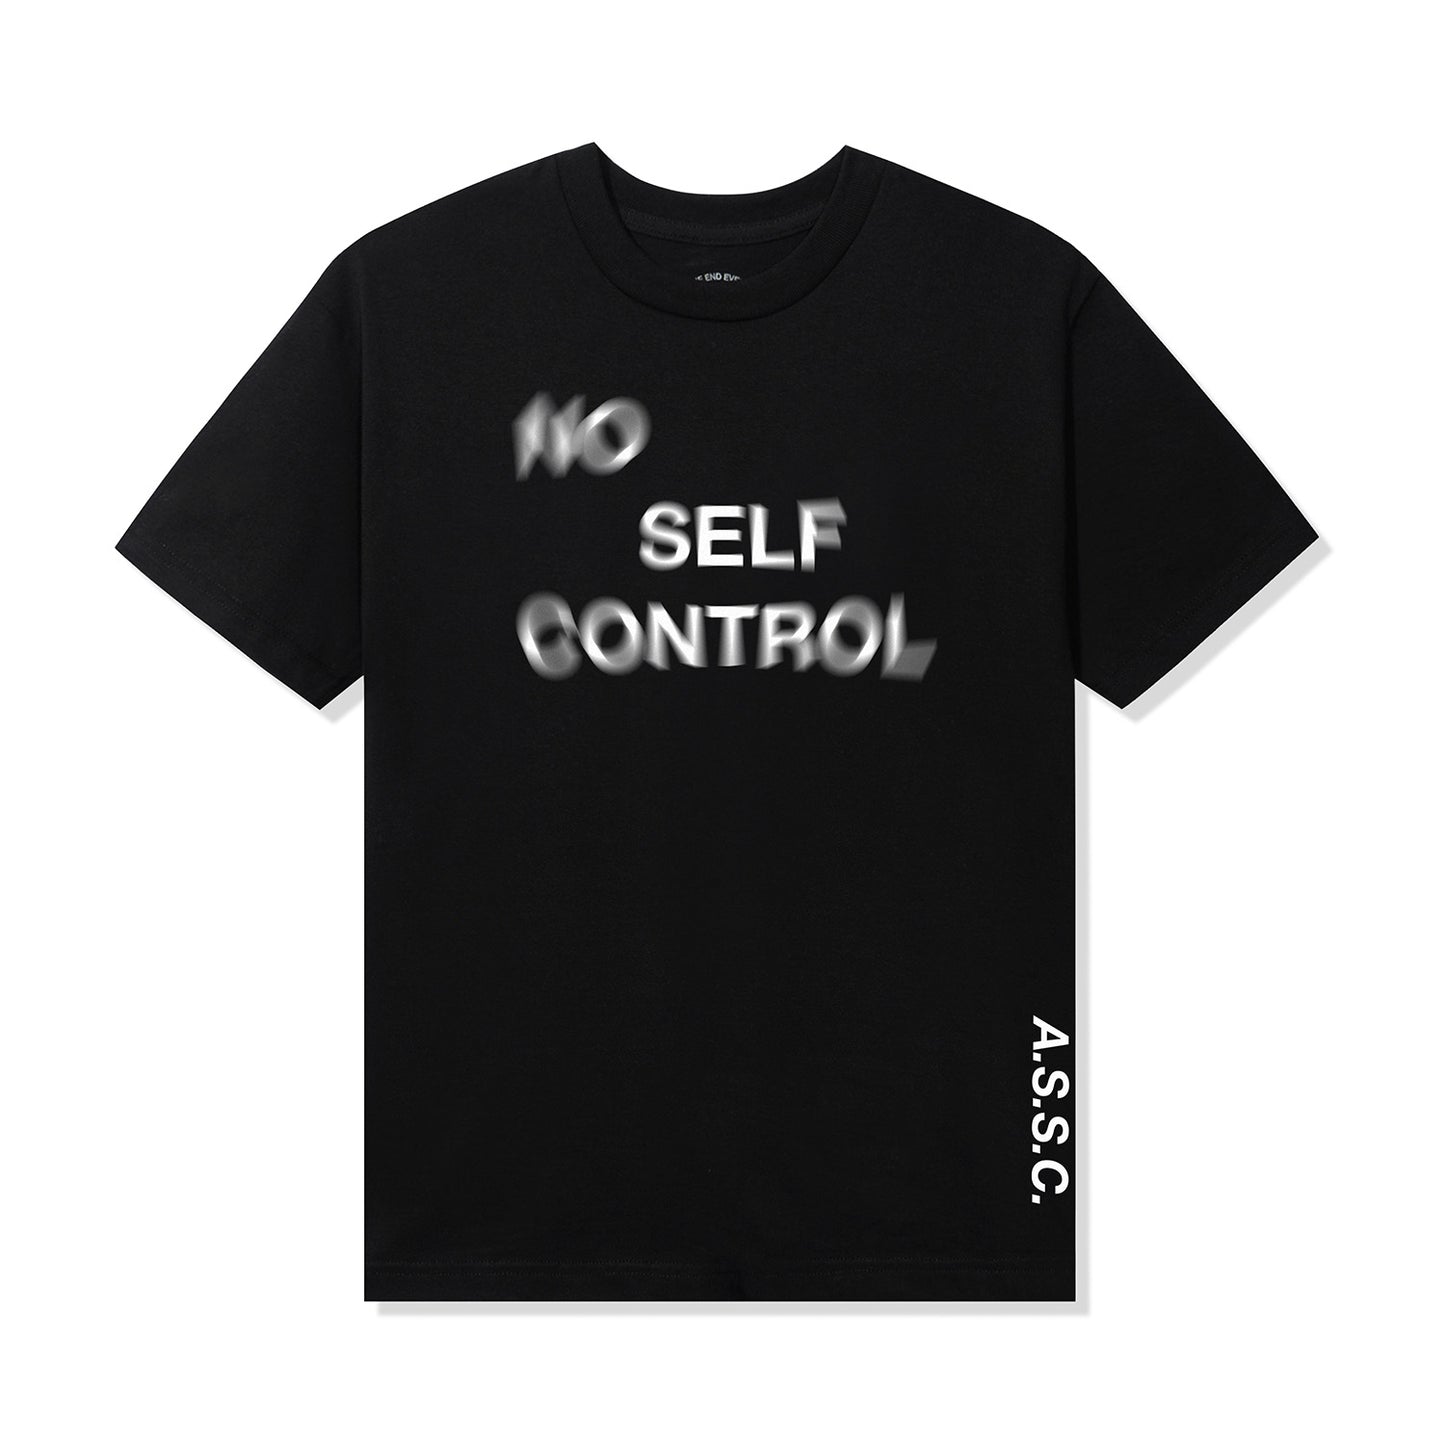 No Self Control Tee - Black